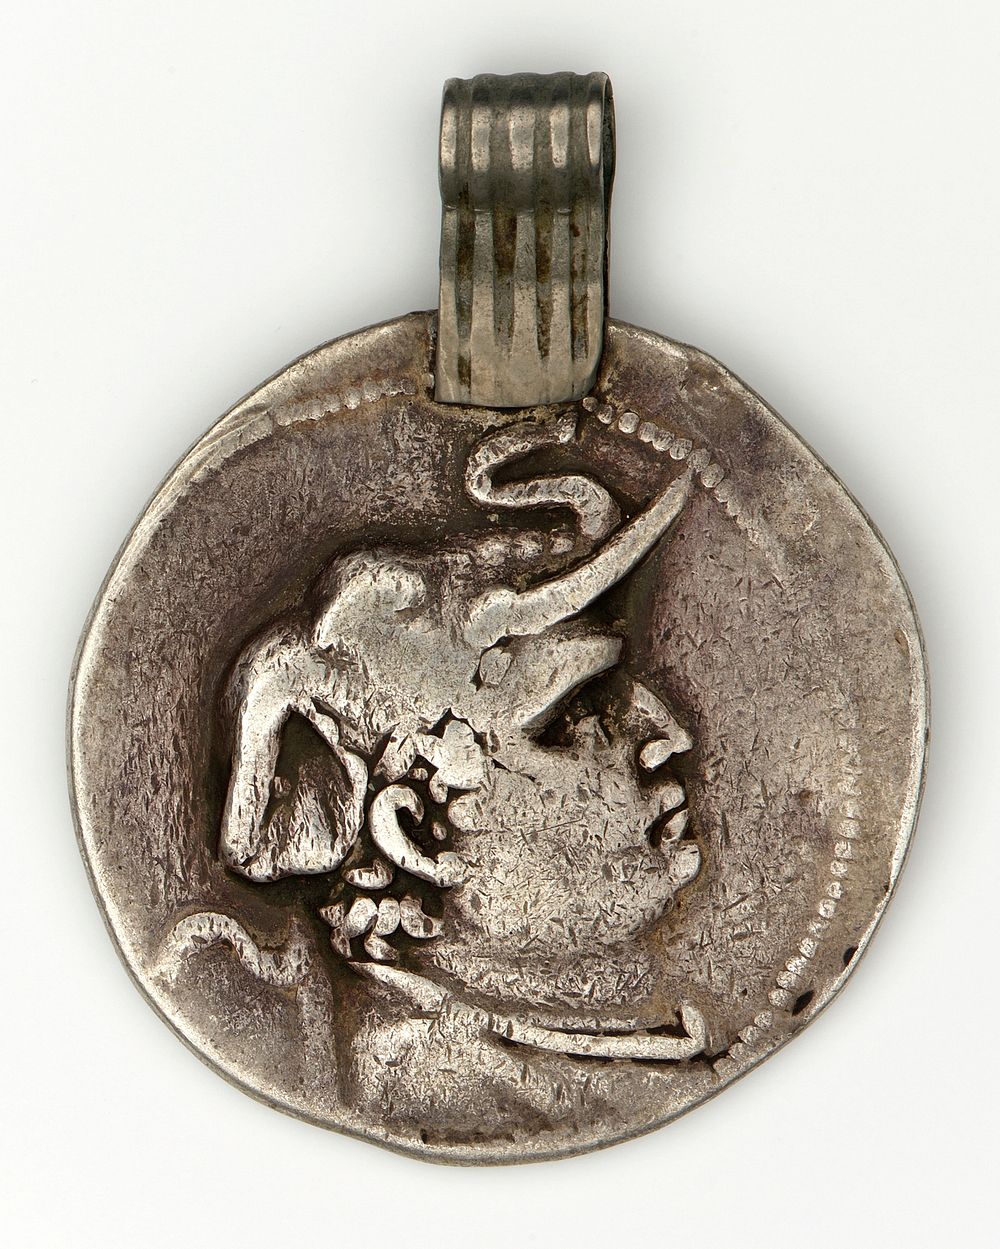 Coin of Demetrius